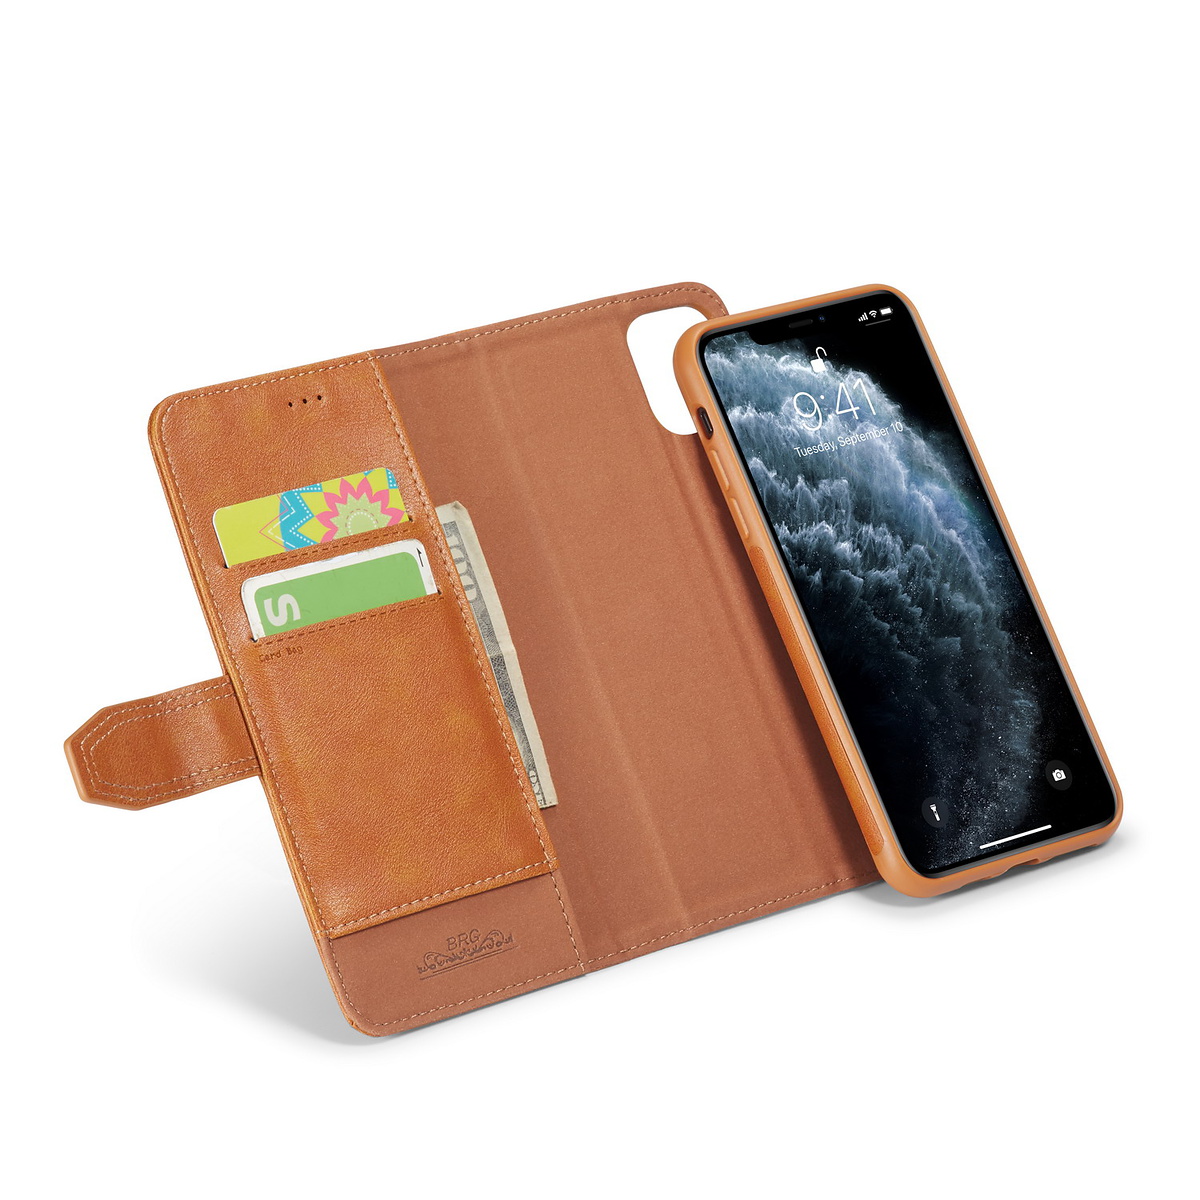 BRG Luxury plånboksfodral med ställ, iPhone 11, brun